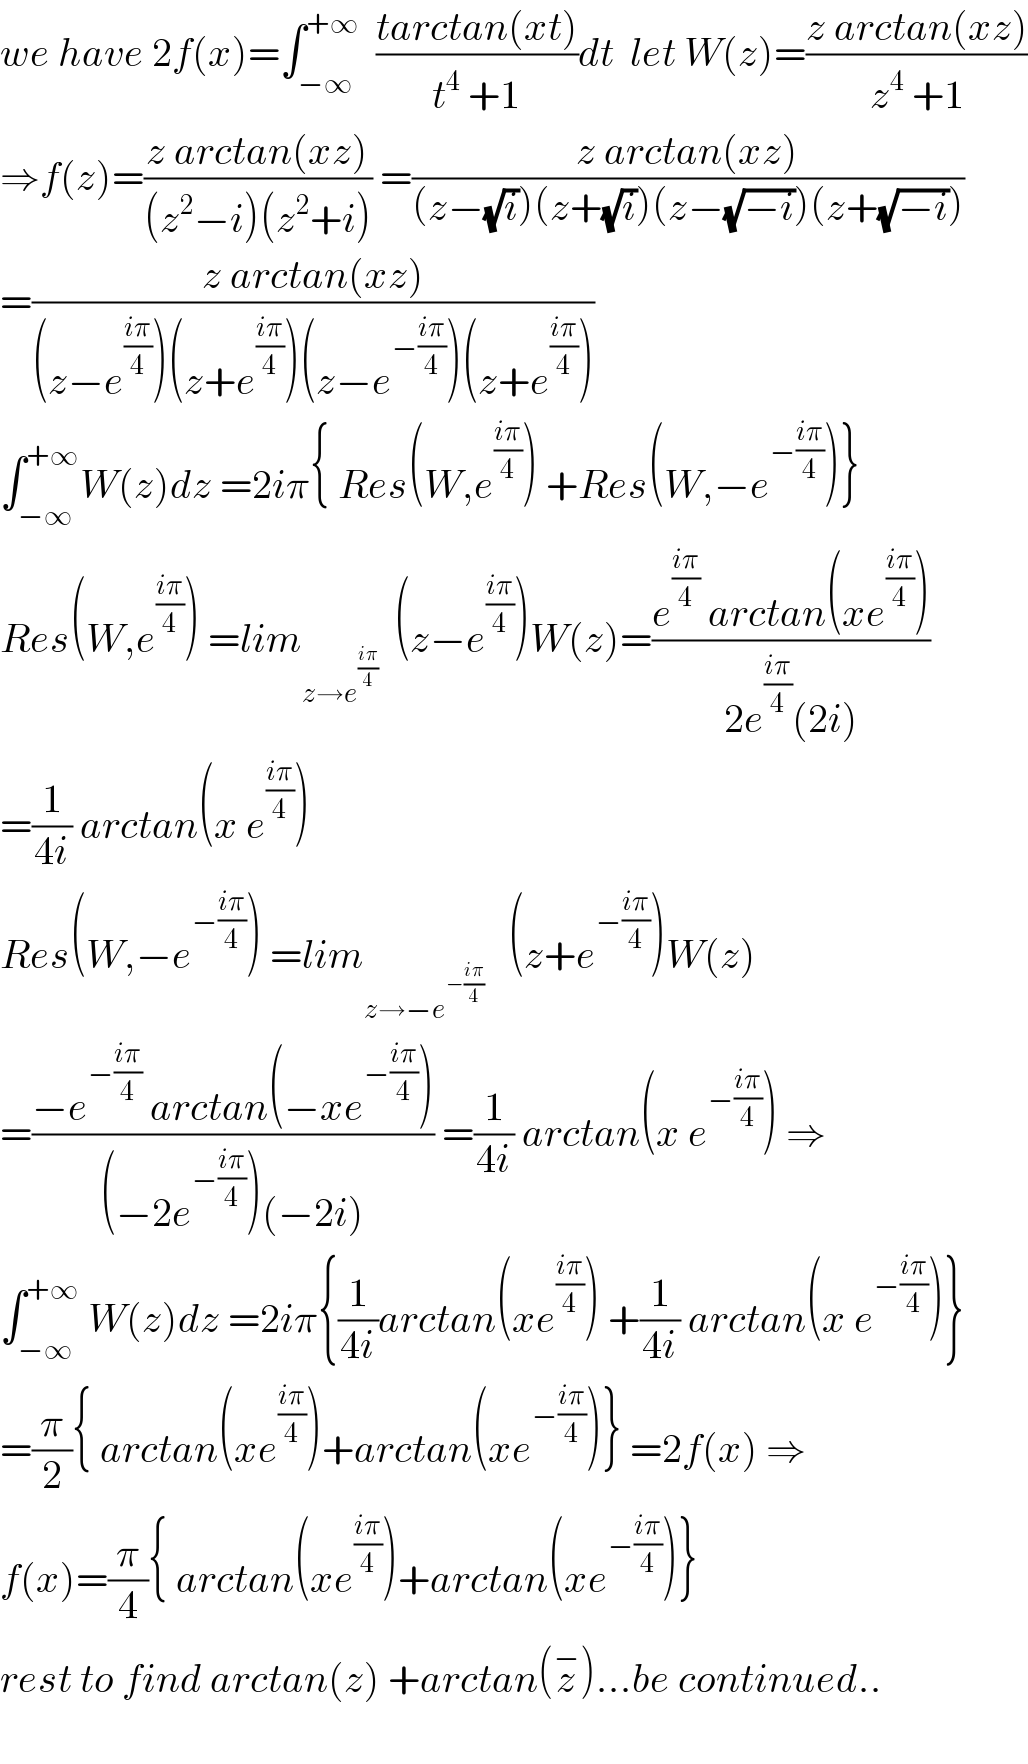 we have 2f(x)=∫_(−∞) ^(+∞)   ((tarctan(xt))/(t^4  +1))dt  let W(z)=((z arctan(xz))/(z^4  +1))  ⇒f(z)=((z arctan(xz))/((z^2 −i)(z^2 +i))) =((z arctan(xz))/((z−(√i))(z+(√i))(z−(√(−i)))(z+(√(−i)))))  =((z arctan(xz))/((z−e^((iπ)/4) )(z+e^((iπ)/4) )(z−e^(−((iπ)/4)) )(z+e^((iπ)/4) )))  ∫_(−∞) ^(+∞) W(z)dz =2iπ{ Res(W,e^((iπ)/4) ) +Res(W,−e^(−((iπ)/4)) )}  Res(W,e^((iπ)/4) ) =lim_(z→e^((iπ)/4) )   (z−e^((iπ)/4) )W(z)=((e^((iπ)/4)  arctan(xe^((iπ)/4) ))/(2e^((iπ)/4) (2i)))  =(1/(4i)) arctan(x e^((iπ)/4) )  Res(W,−e^(−((iπ)/4)) ) =lim_(z→−e^(−((iπ)/4)) )    (z+e^(−((iπ)/4)) )W(z)  =((−e^(−((iπ)/4))  arctan(−xe^(−((iπ)/4)) ))/((−2e^(−((iπ)/4)) )(−2i))) =(1/(4i)) arctan(x e^(−((iπ)/4)) ) ⇒  ∫_(−∞) ^(+∞)  W(z)dz =2iπ{(1/(4i))arctan(xe^((iπ)/4) ) +(1/(4i)) arctan(x e^(−((iπ)/4)) )}  =(π/2){ arctan(xe^((iπ)/4) )+arctan(xe^(−((iπ)/4)) )} =2f(x) ⇒  f(x)=(π/4){ arctan(xe^((iπ)/4) )+arctan(xe^(−((iπ)/4)) )}  rest to find arctan(z) +arctan(z^− )...be continued..    